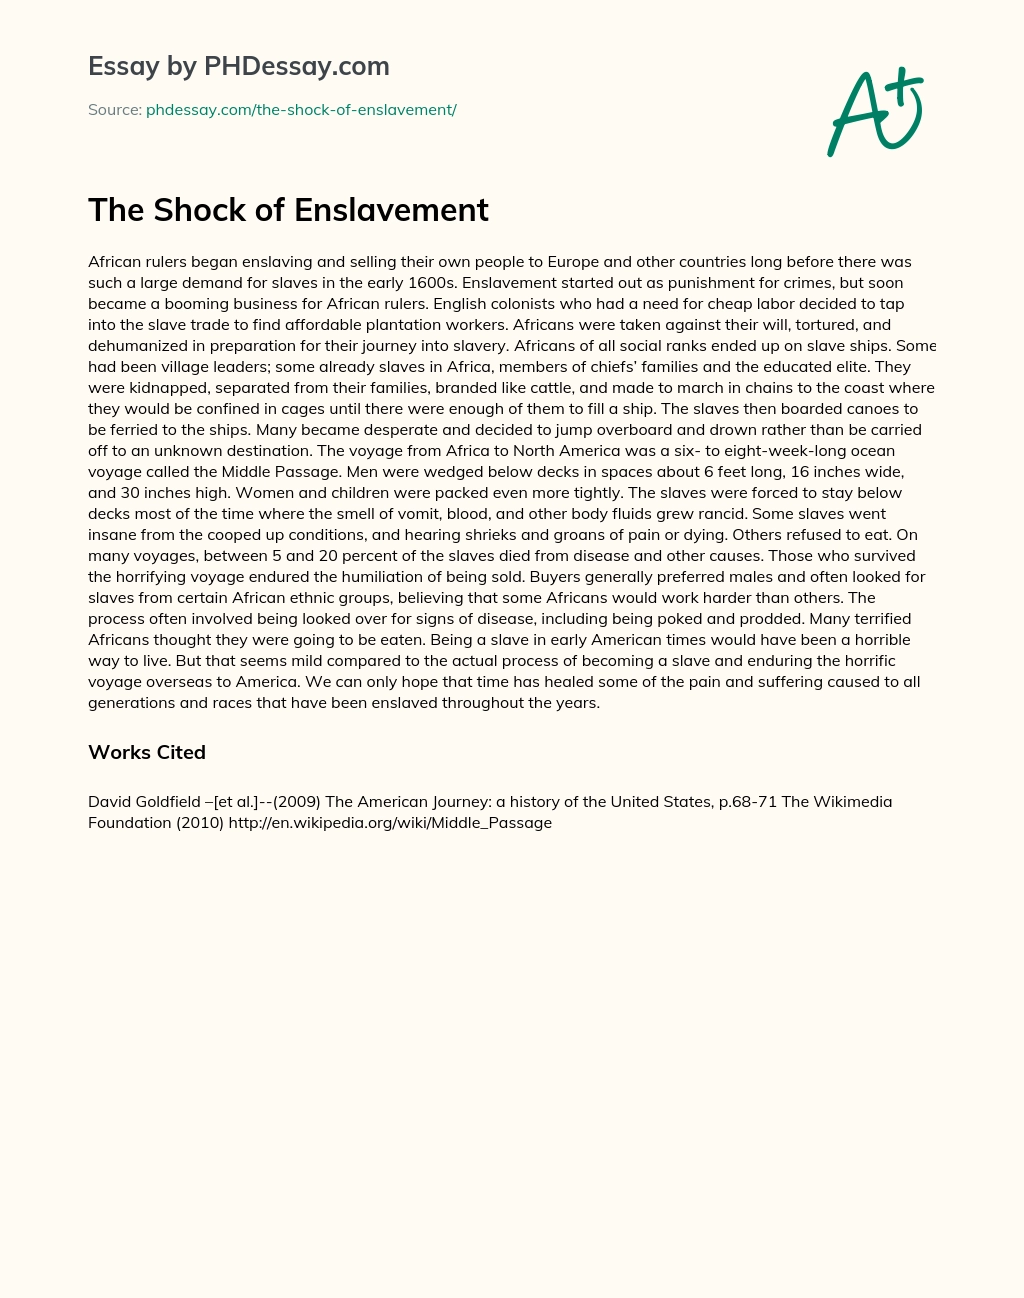 The Shock of Enslavement essay